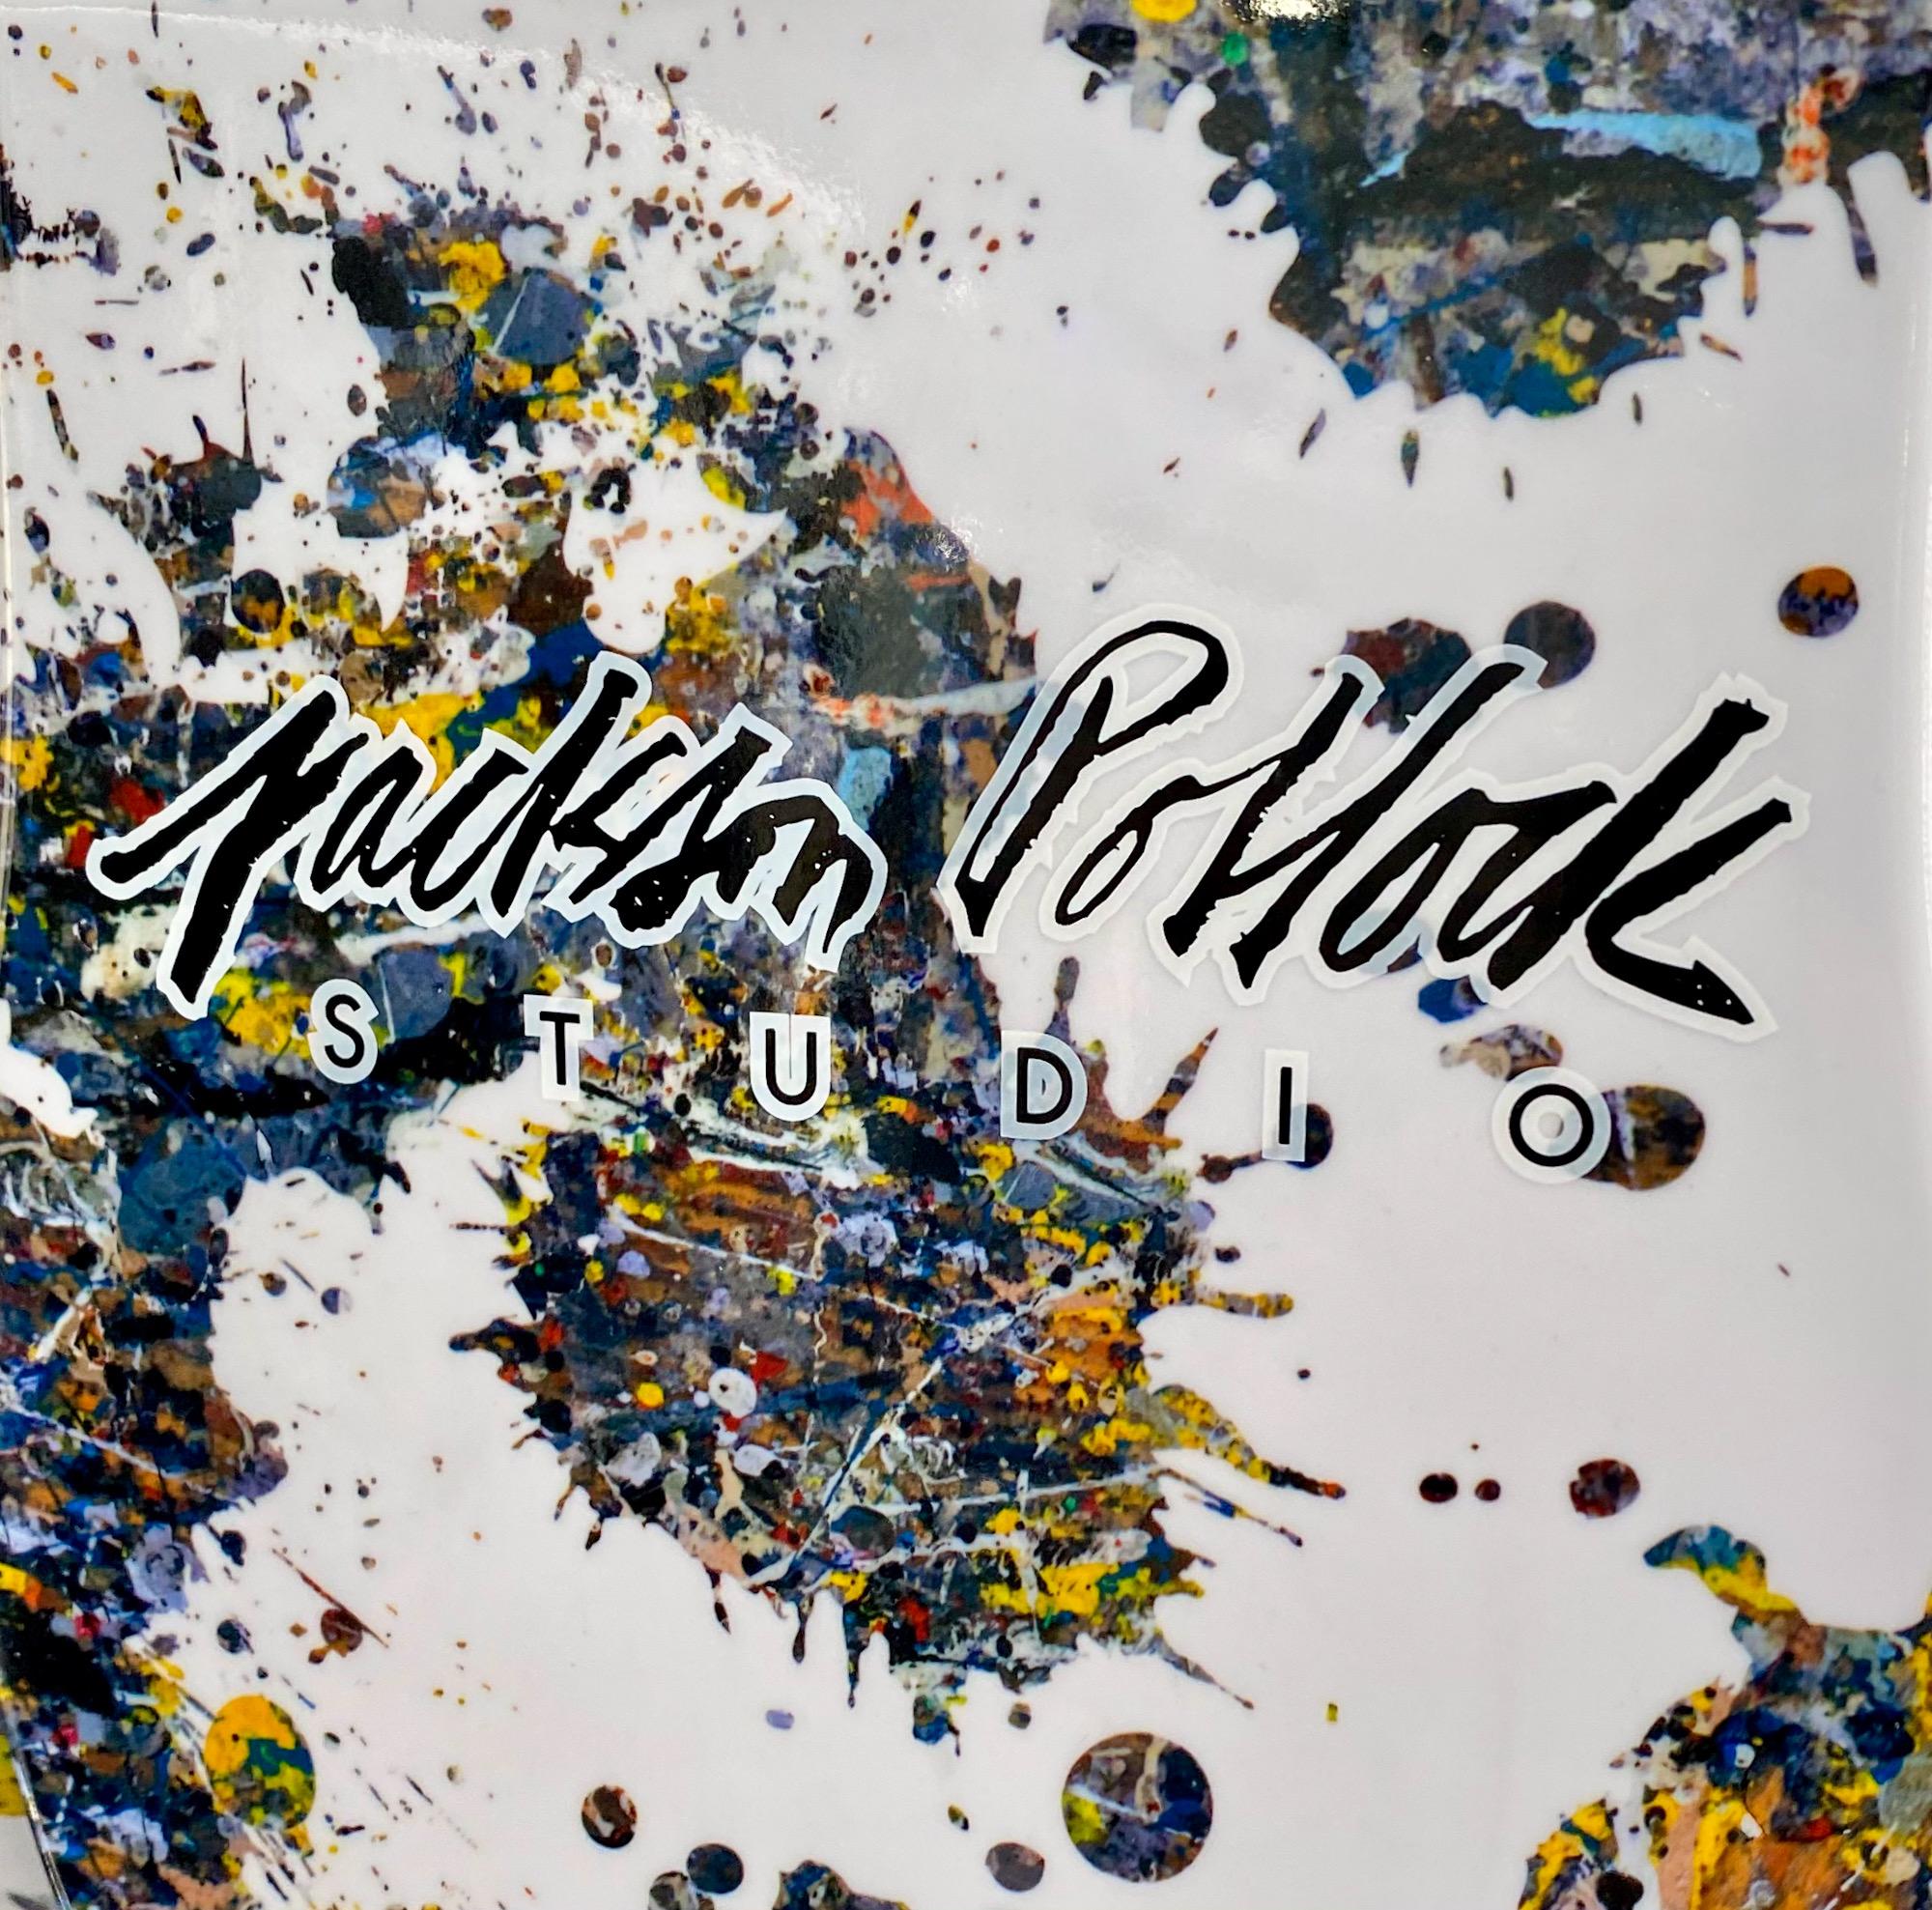 Jackson Pollock Bearbrick 1000% Figur (Jackson Pollock BE@RBRICK) (Grau), Animal Print, von (after) Jackson Pollock 